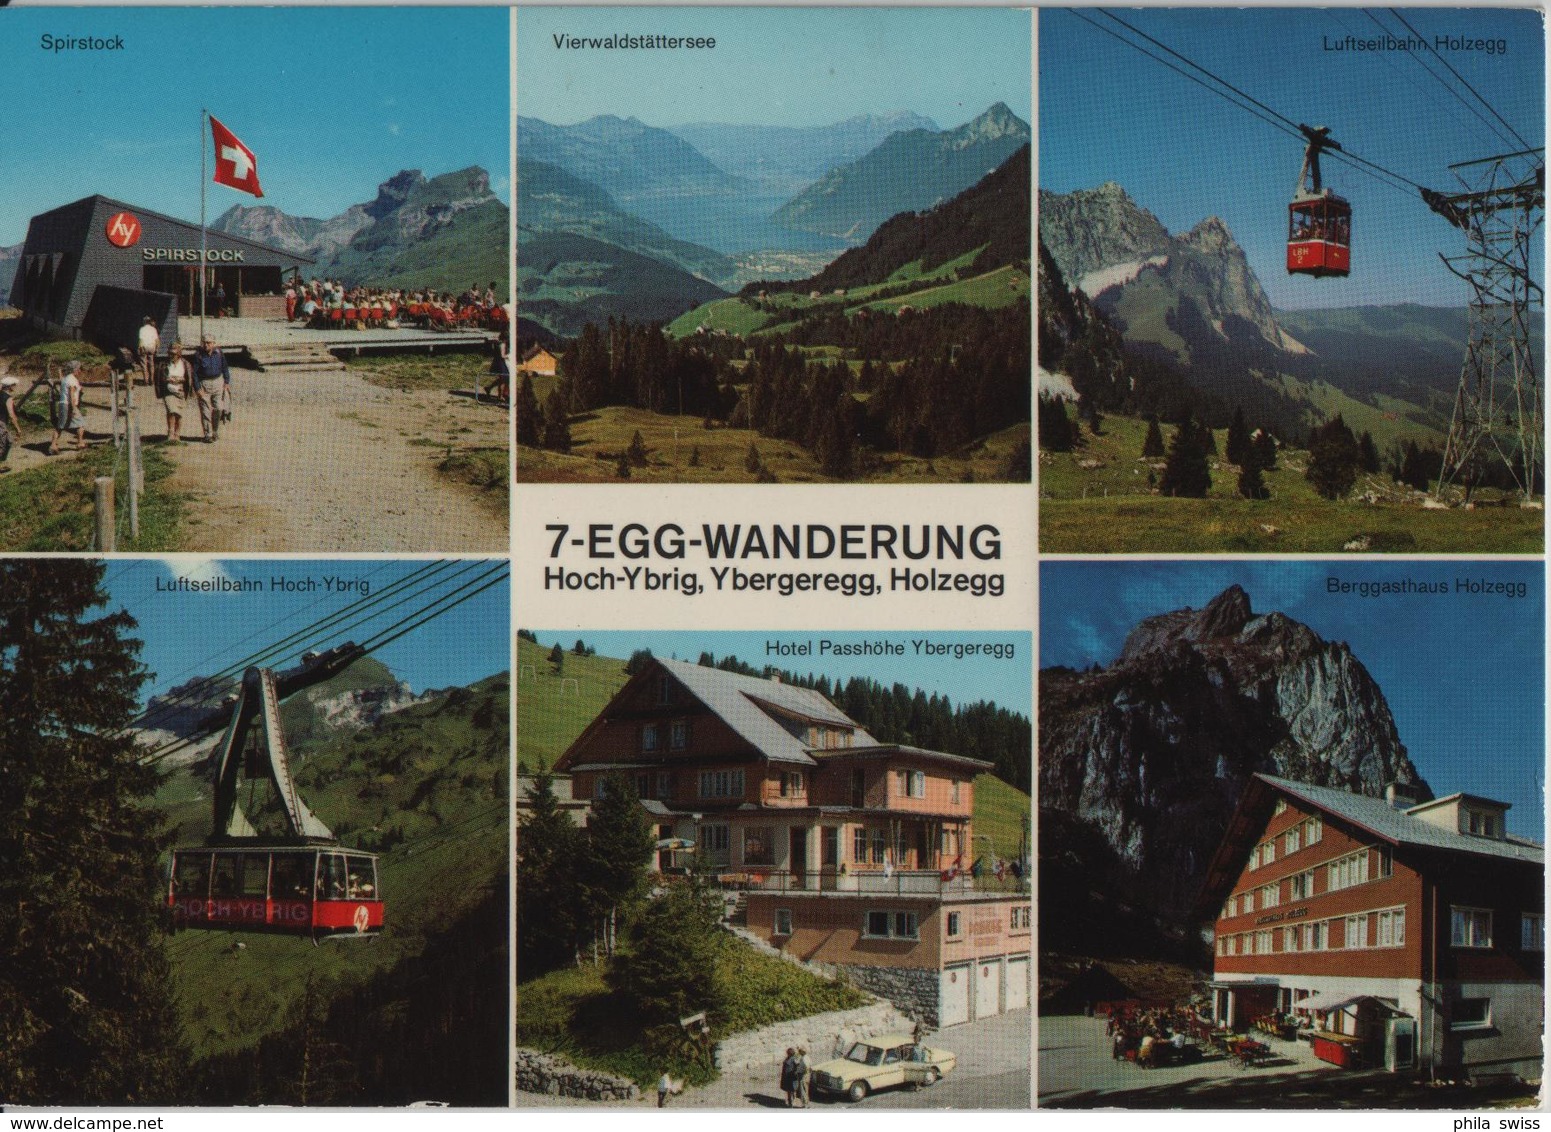 7-Egg-Wanderung - Hoch Ybrig, Yberegg, Holzegg, Spirstock, Brunni Alpthal - Photo: Rud. Suter - Alpthal